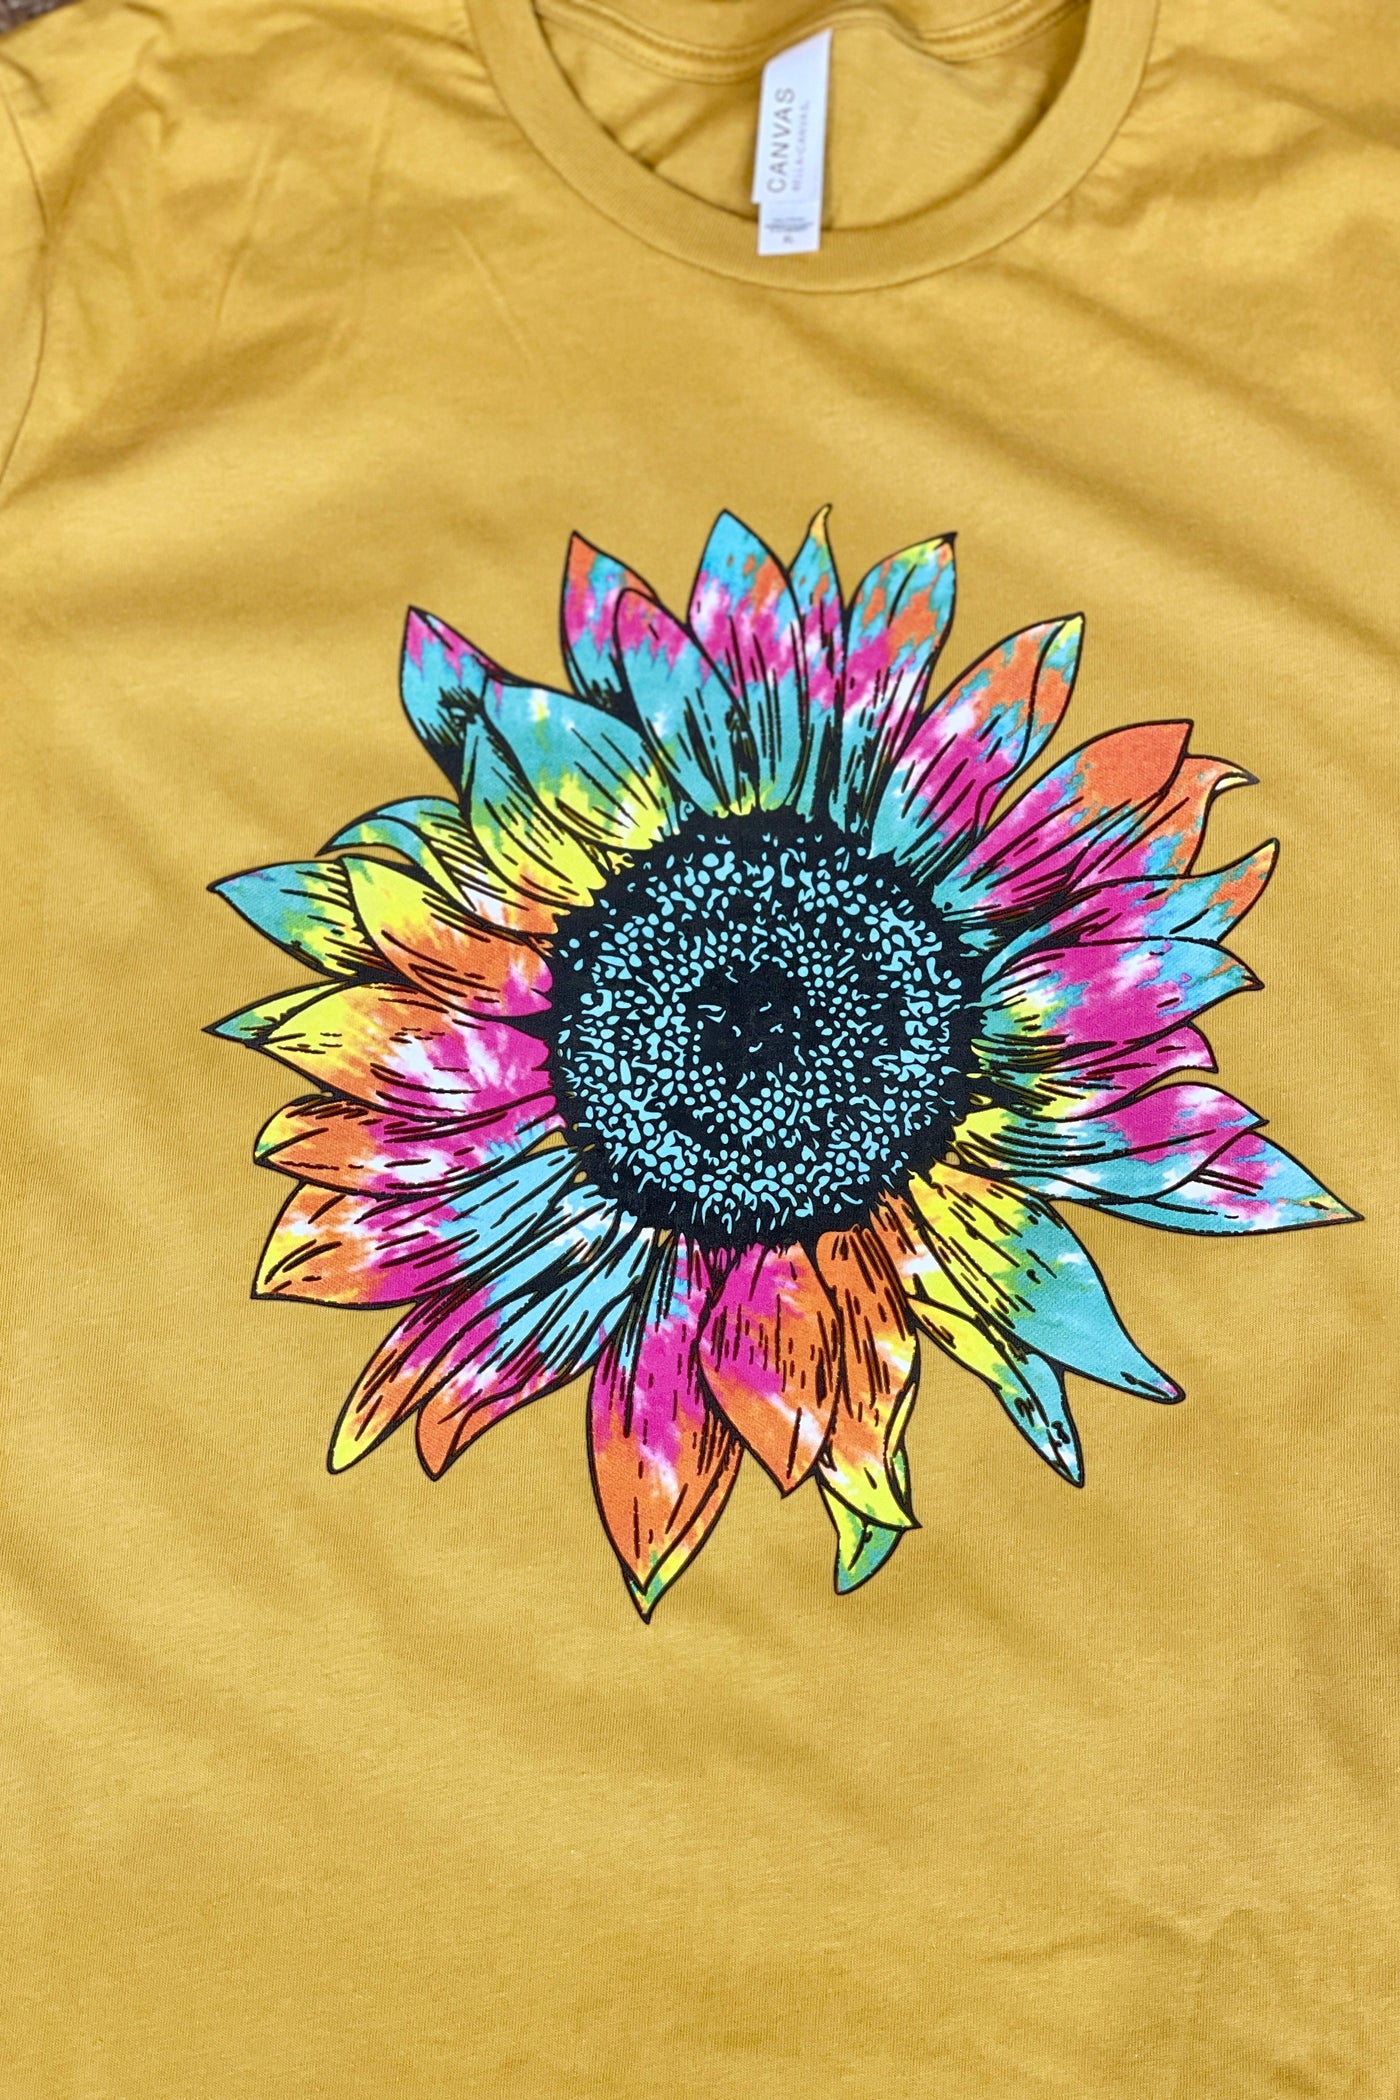 Tie-Dye Sunflower Graphic Tee graphic tees Mark tee 